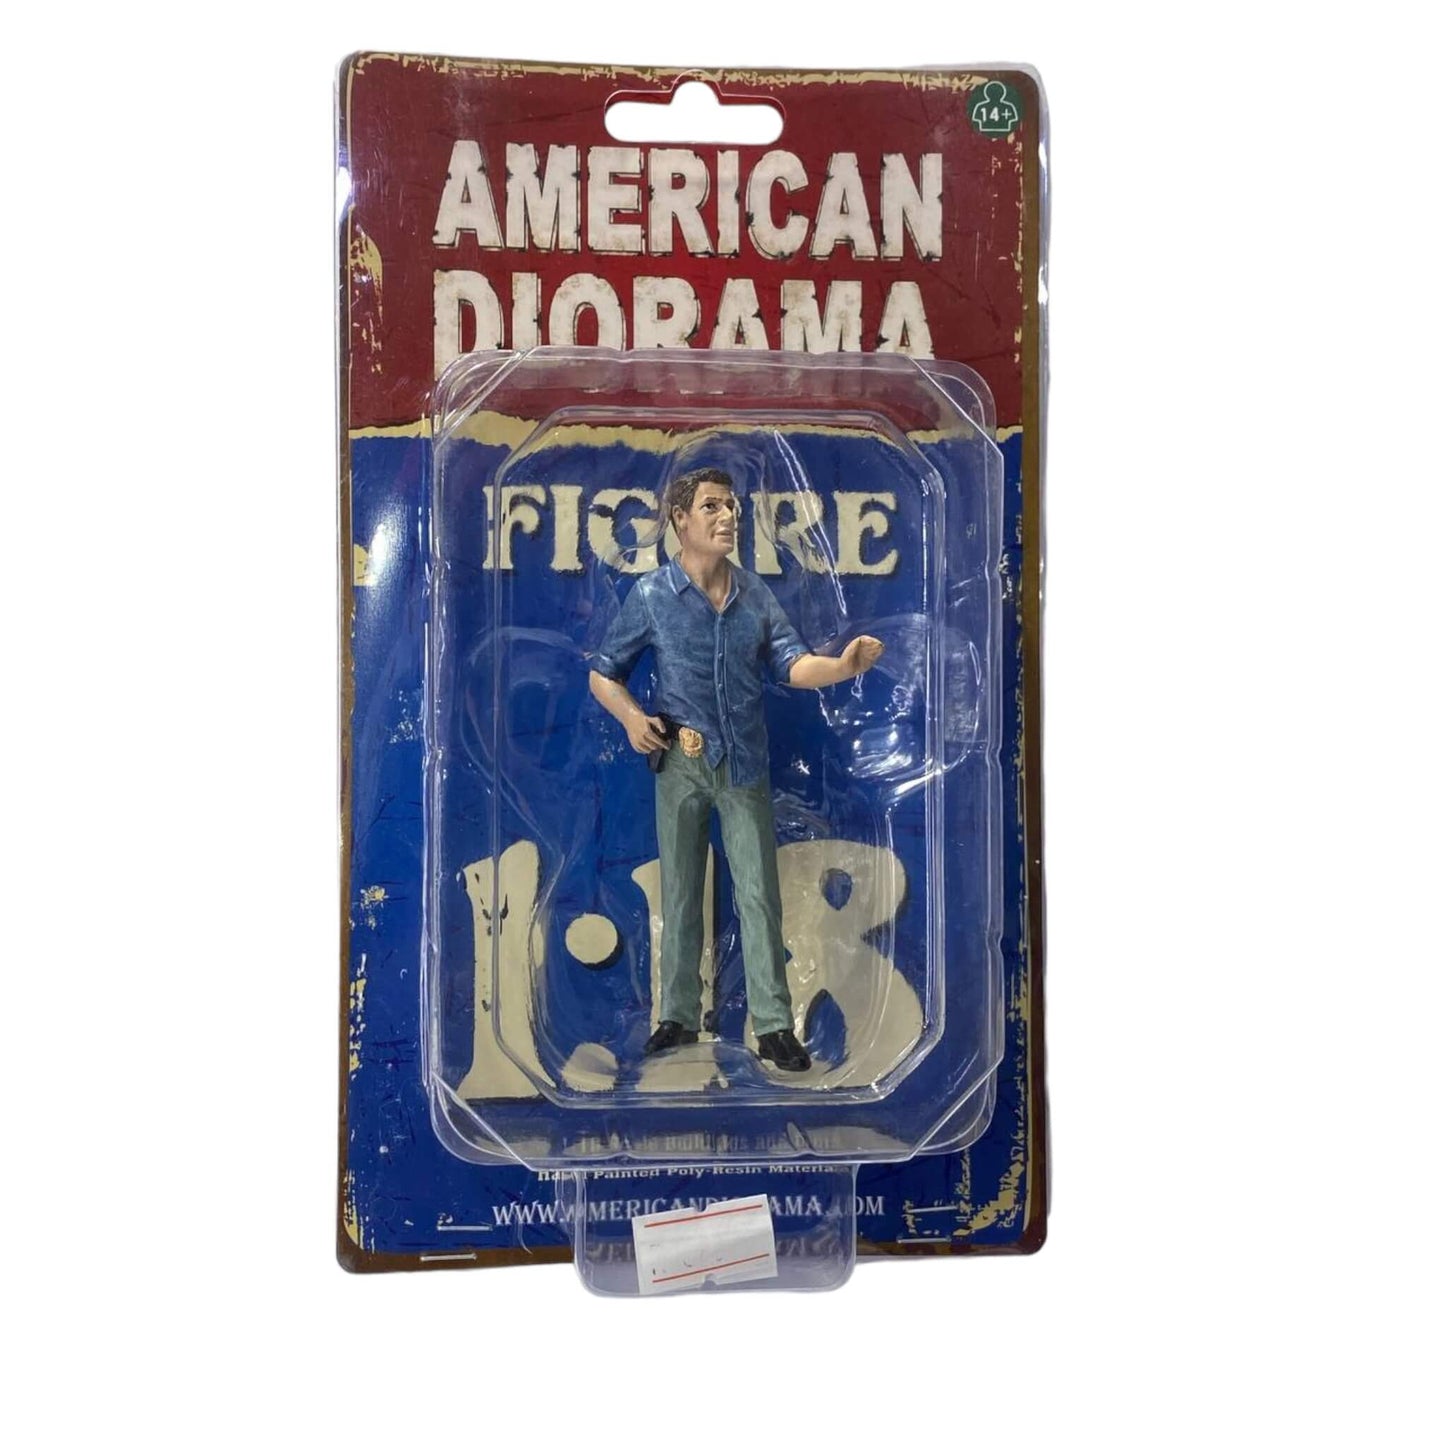 "Race Day 2" Miniature Figure II by American Diorama